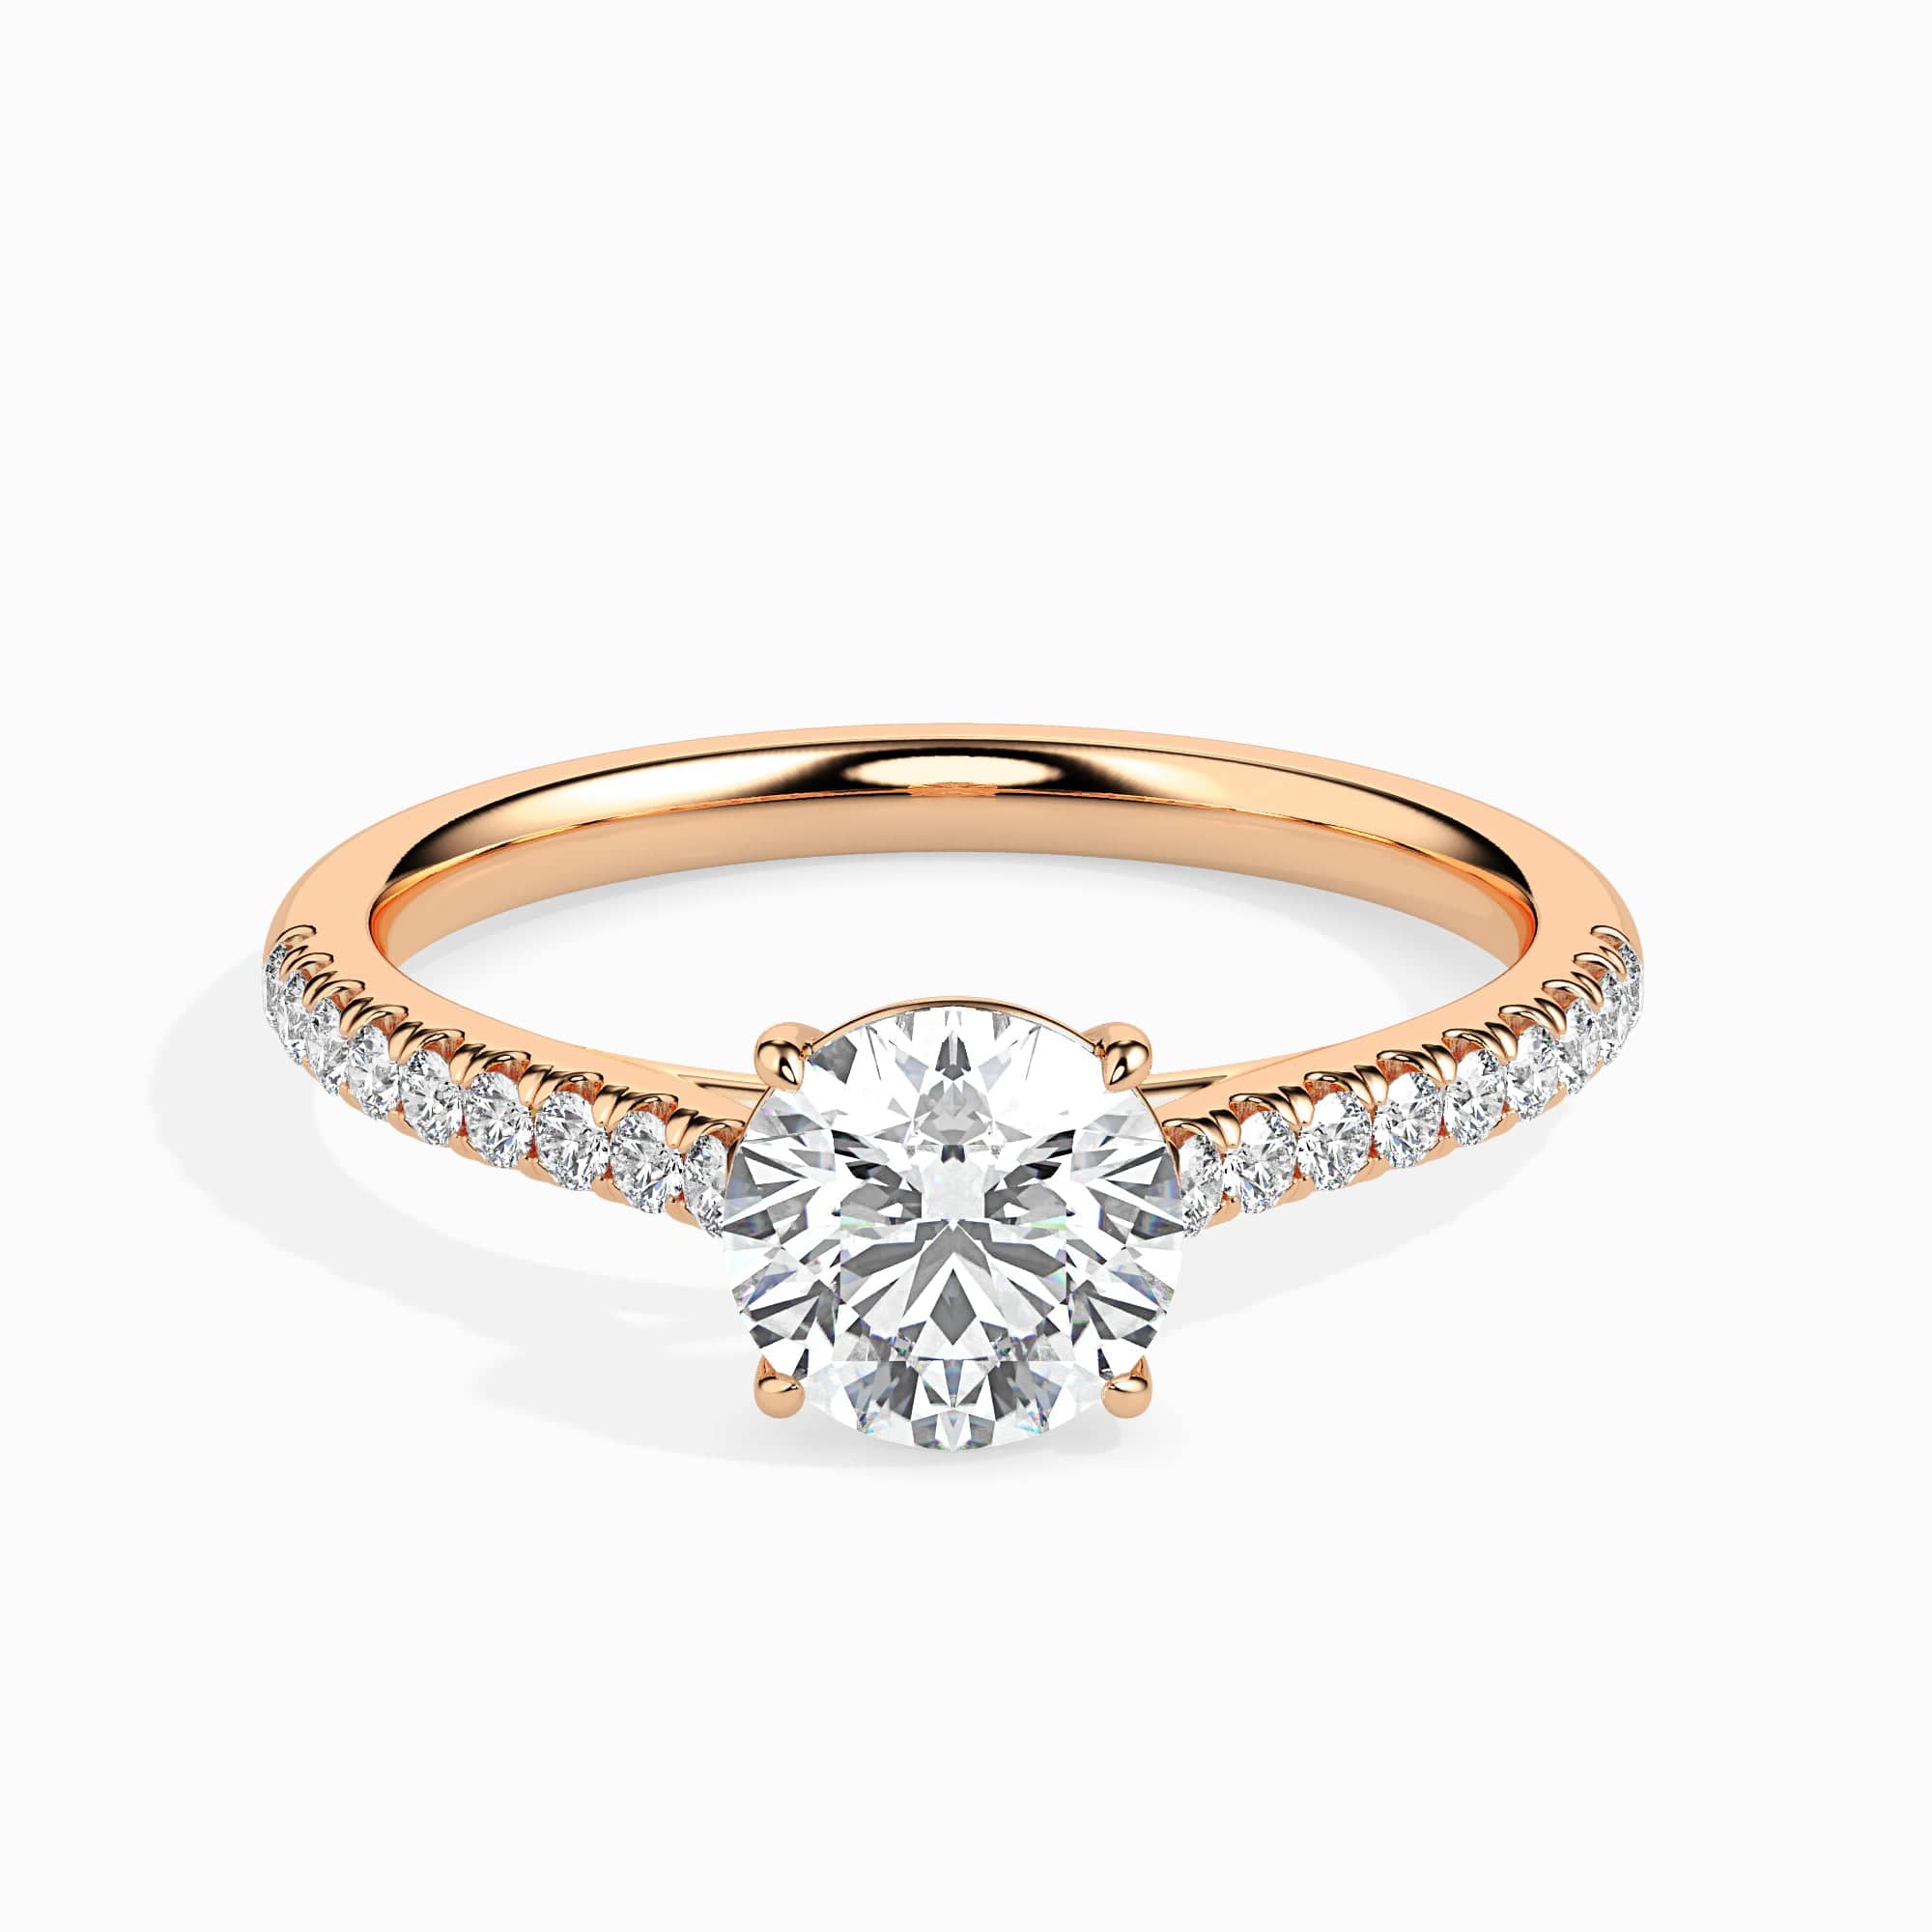 Buy Exquisite 18KT Rose Gold Solitaire Diamond Ring Online | ORRA